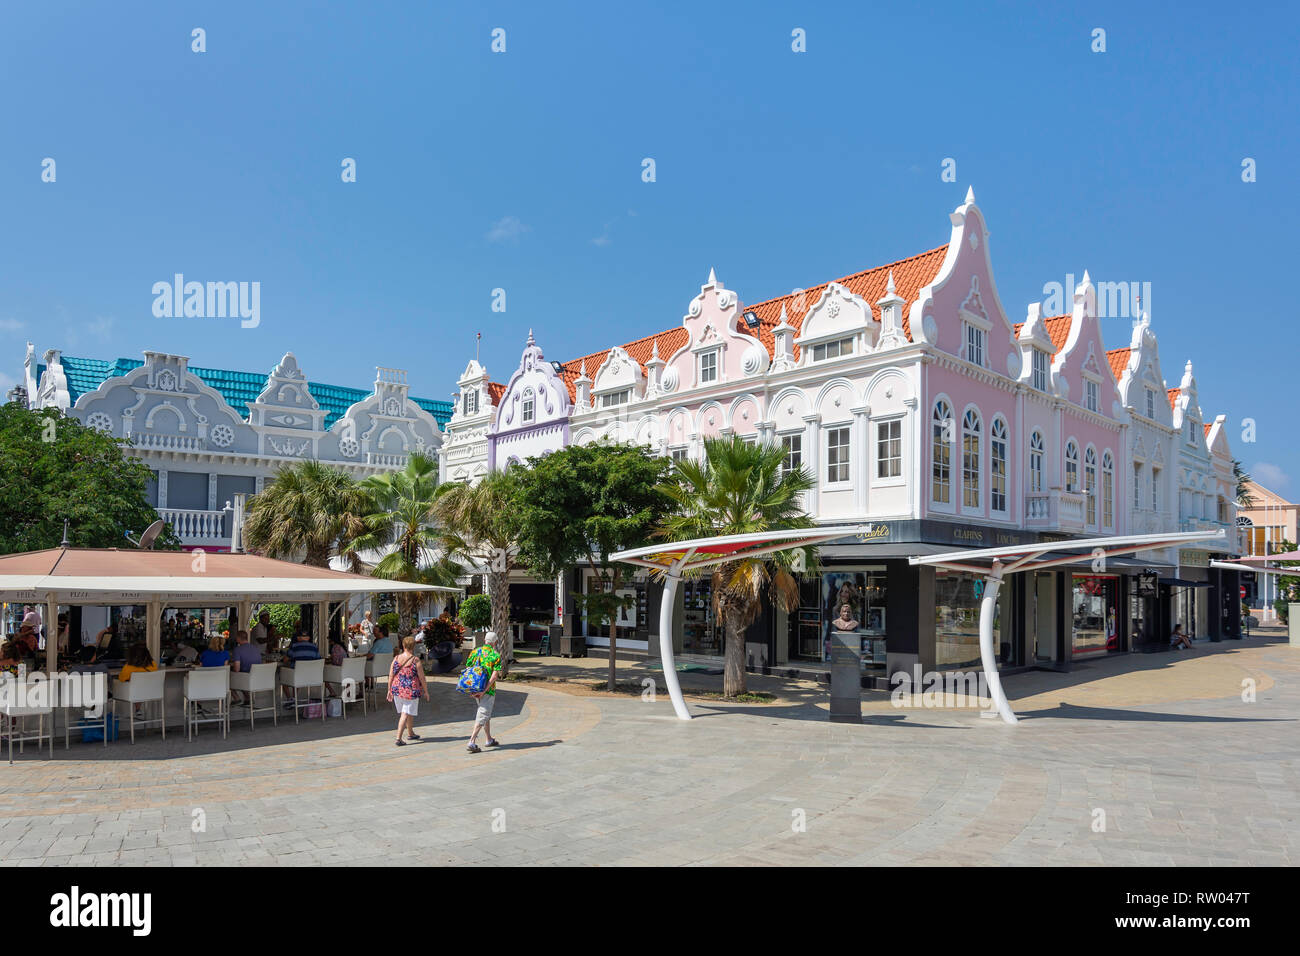 Plaza Daniel Leo showing Dutch colonial-style buildings, Oranjestad, Aruba, ABC Islands, Leeward Antilles, Caribbean Stock Photo